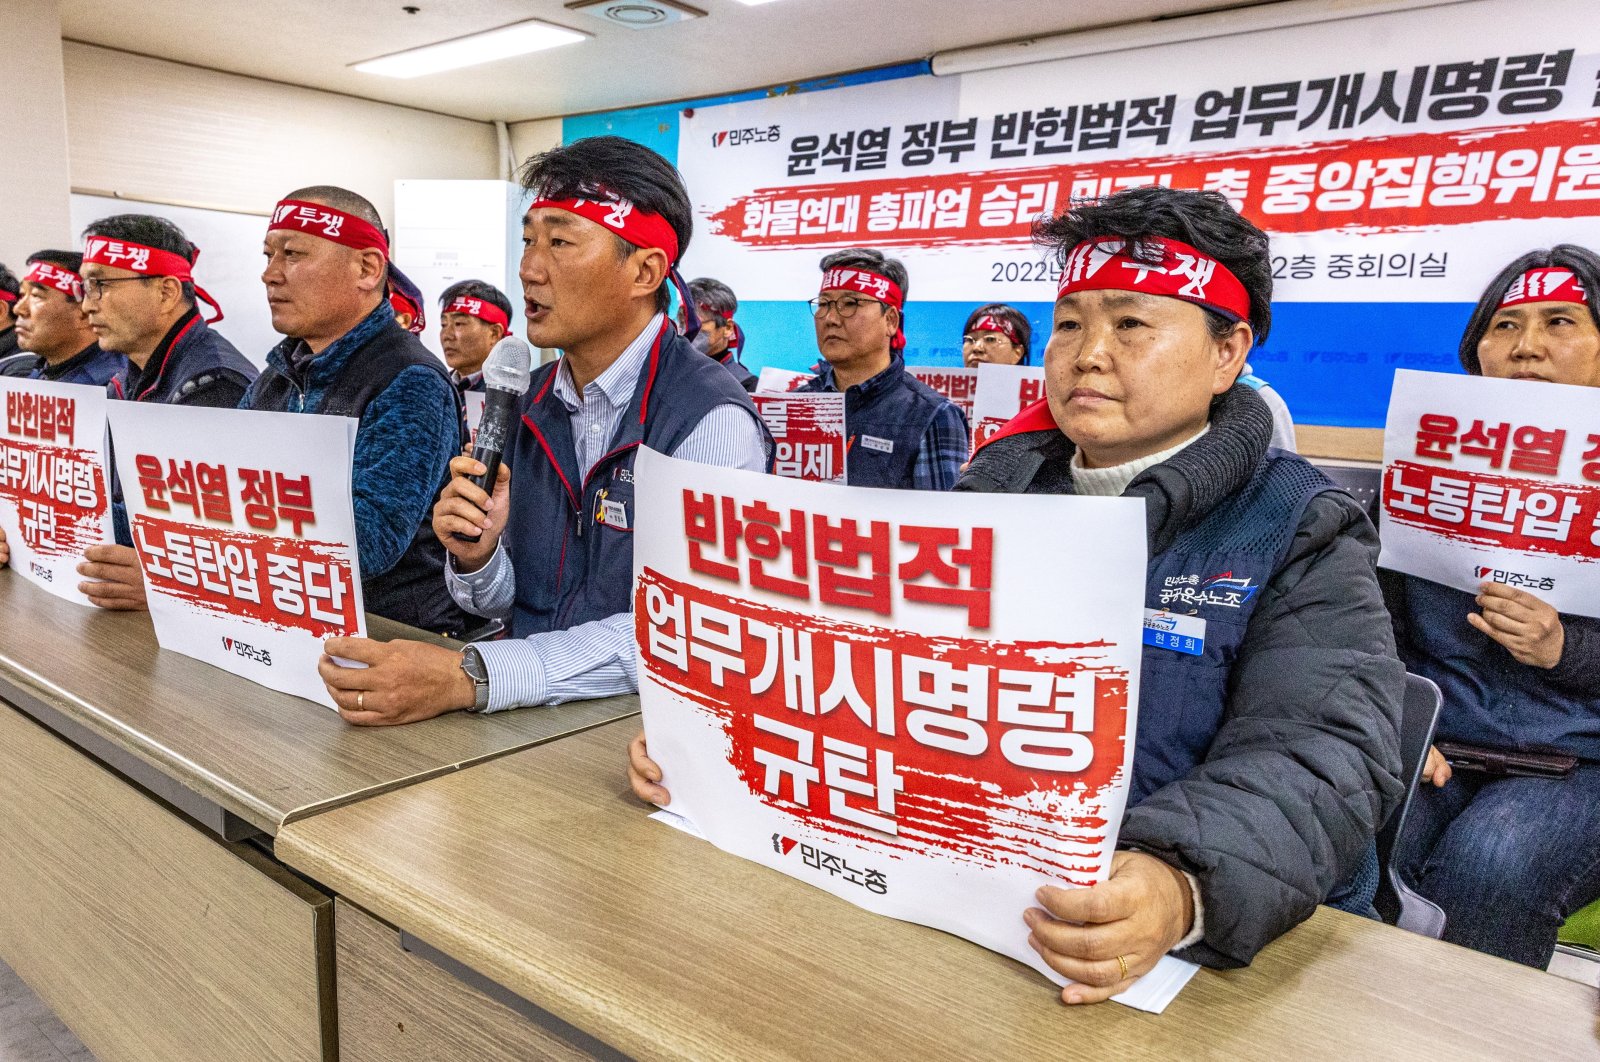 Yang Kyung-soo (2R front), head of the Korean Confederation of Trade Unions (KCTU), announces a plan to stage a strike on Dec. 6, Seoul, South Korea, Nov. 30, 2022. (EPA Photo)